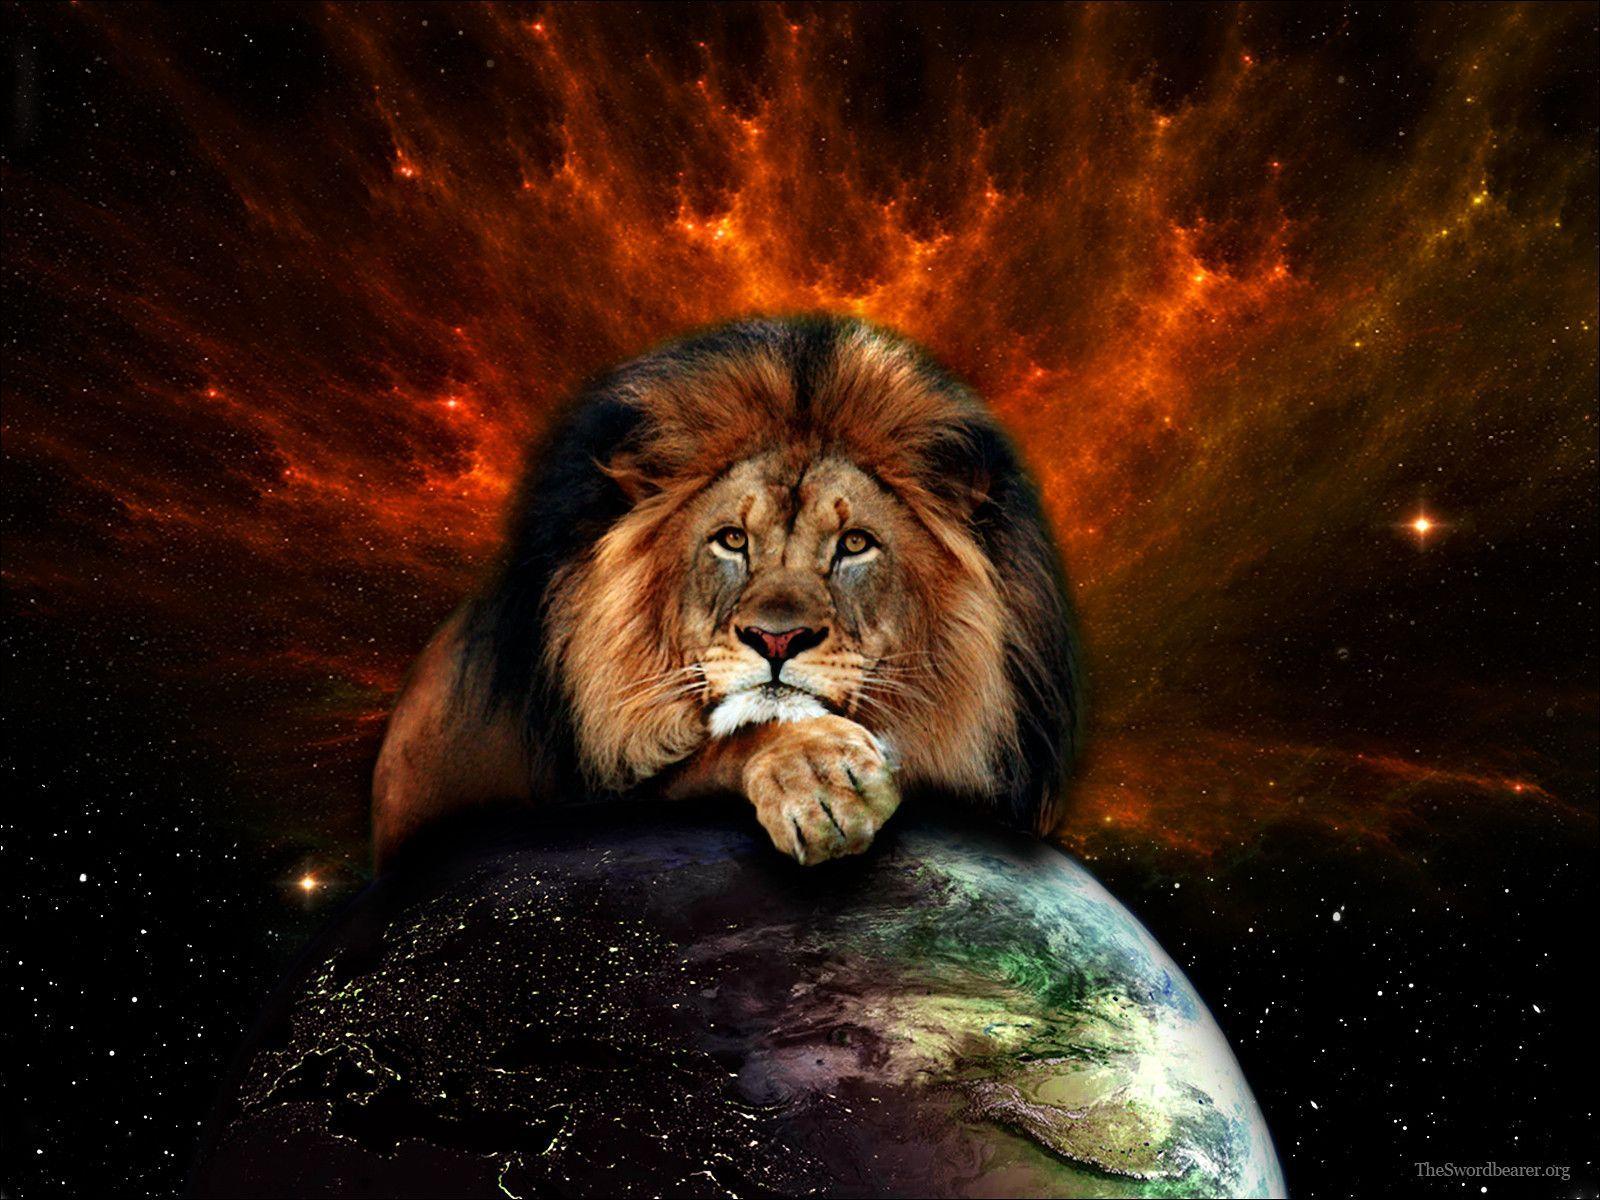 Wallpaper: Lion of the tribe of Judah